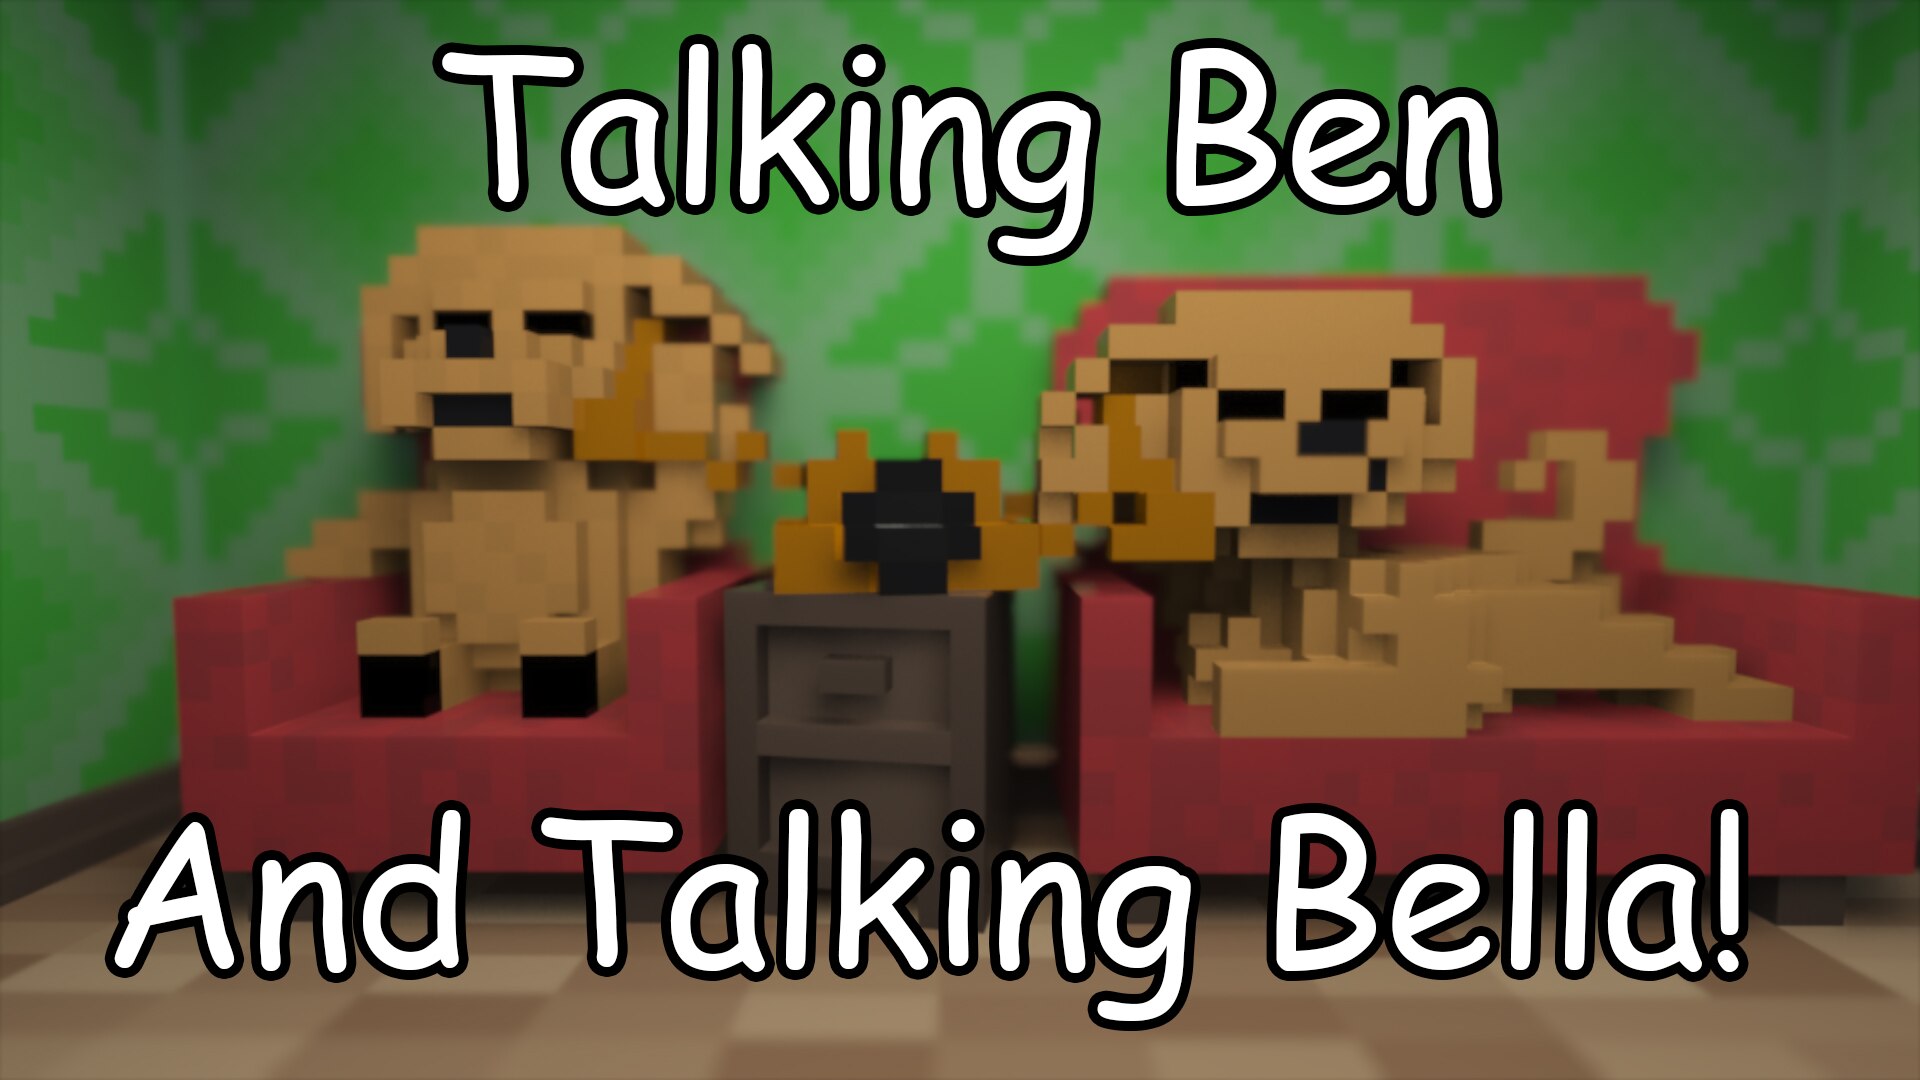 Talking Ben the Dog Mod apk download - Talking Ben the Dog MOD apk